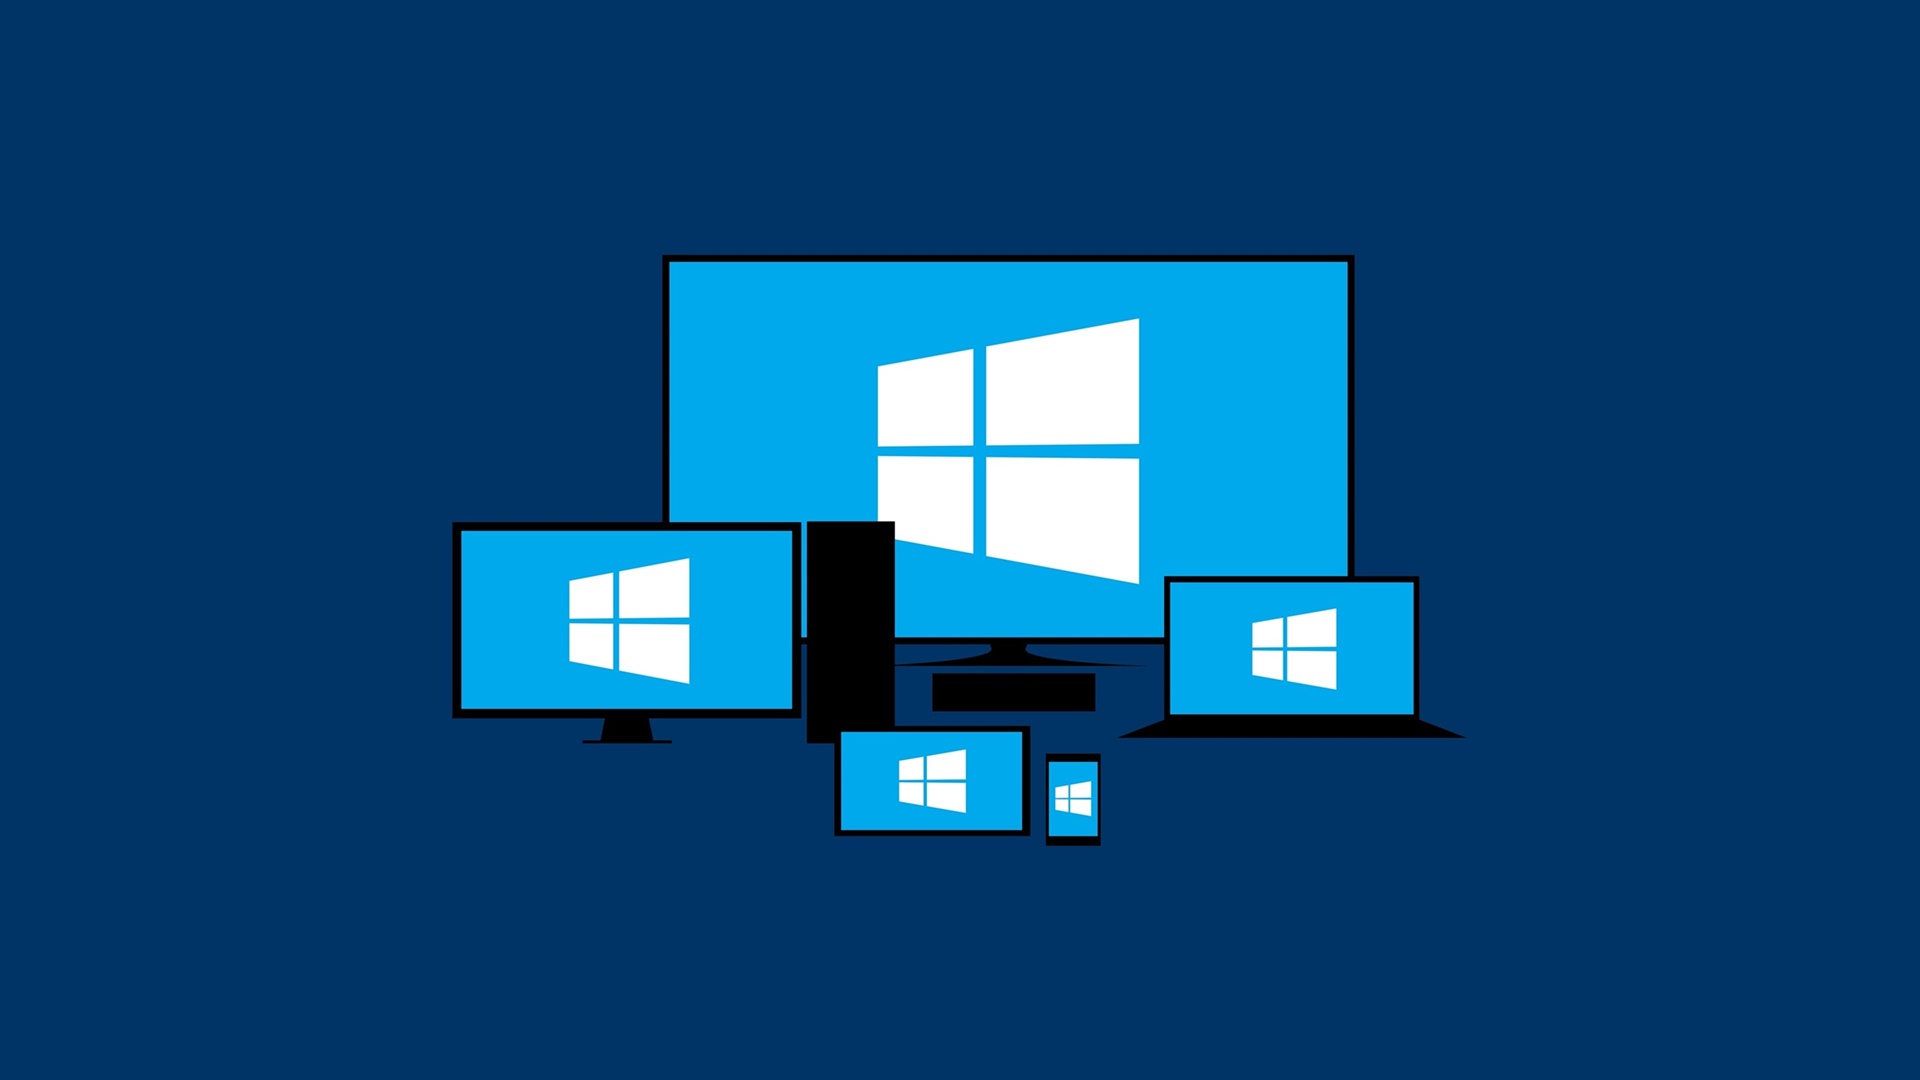 Category - Windows 10 Backgrounds